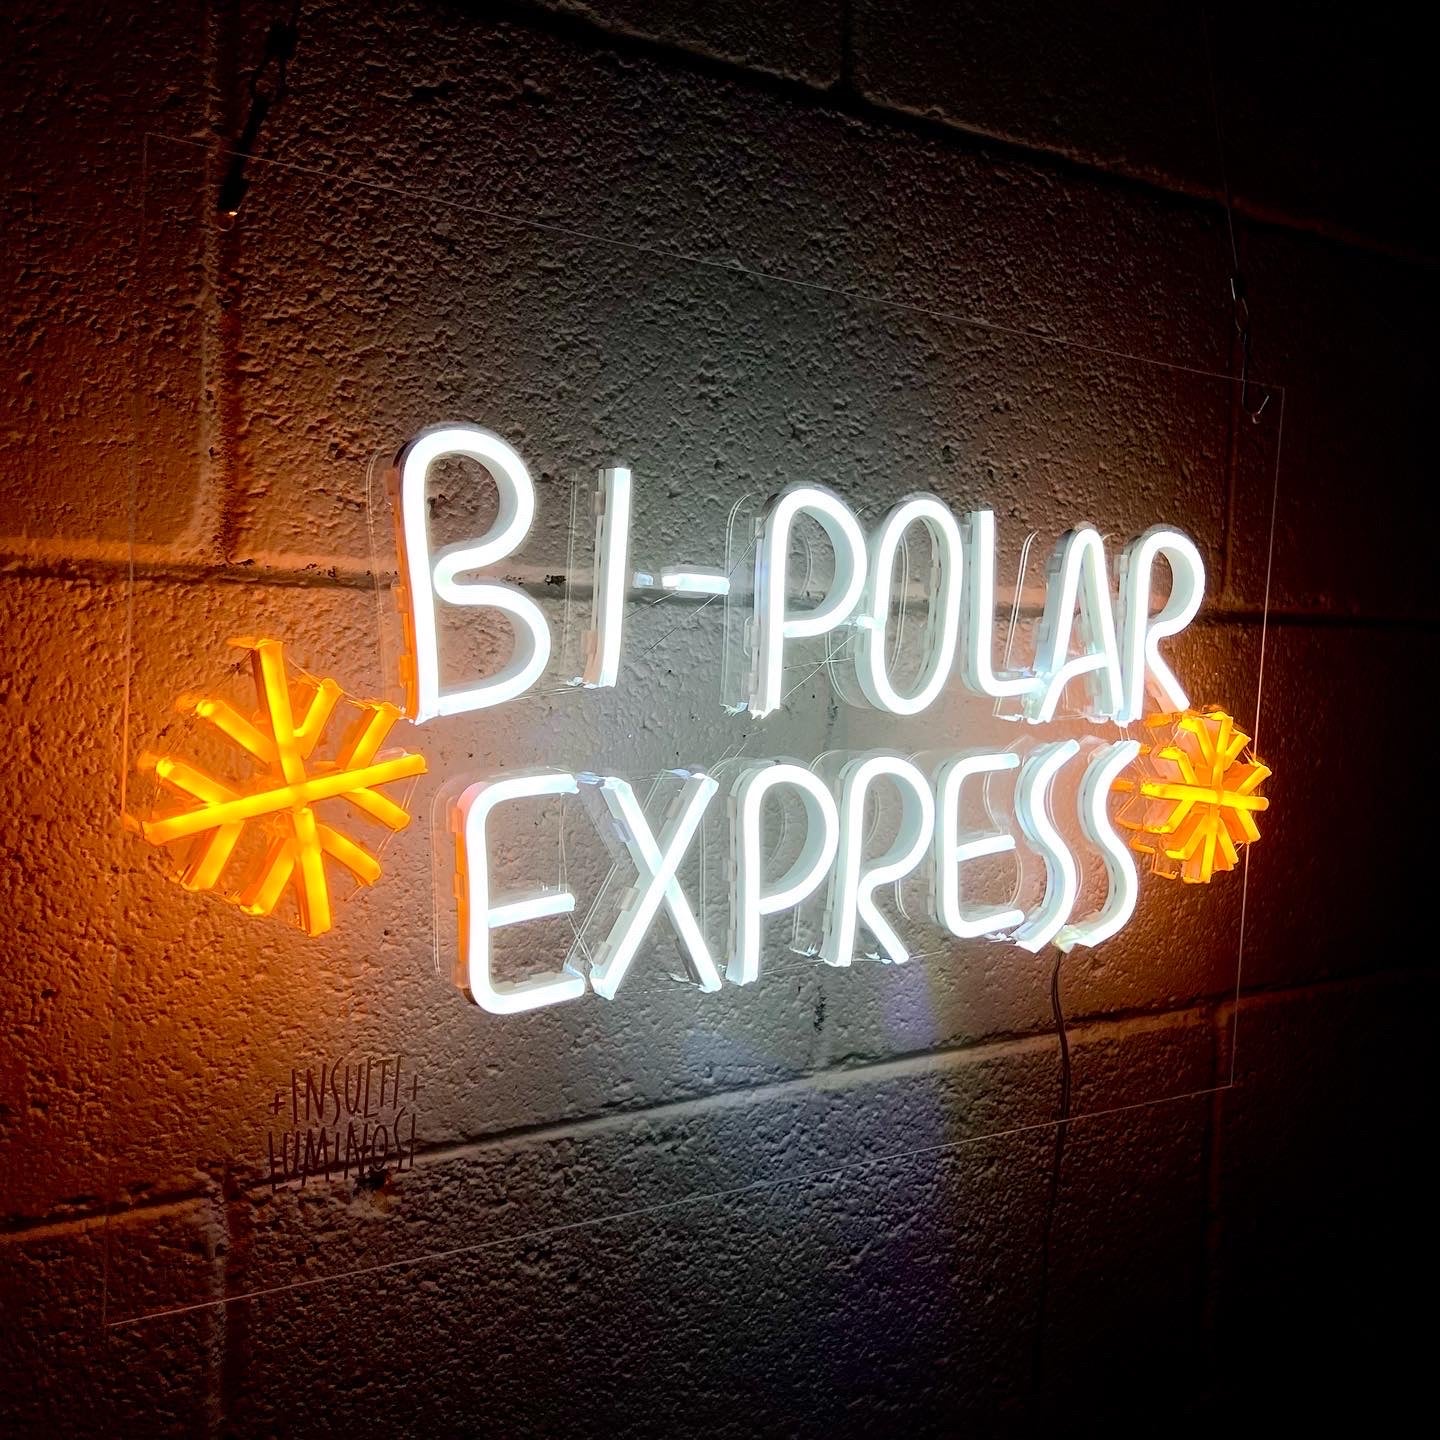 BI-POLAR EXPRESS